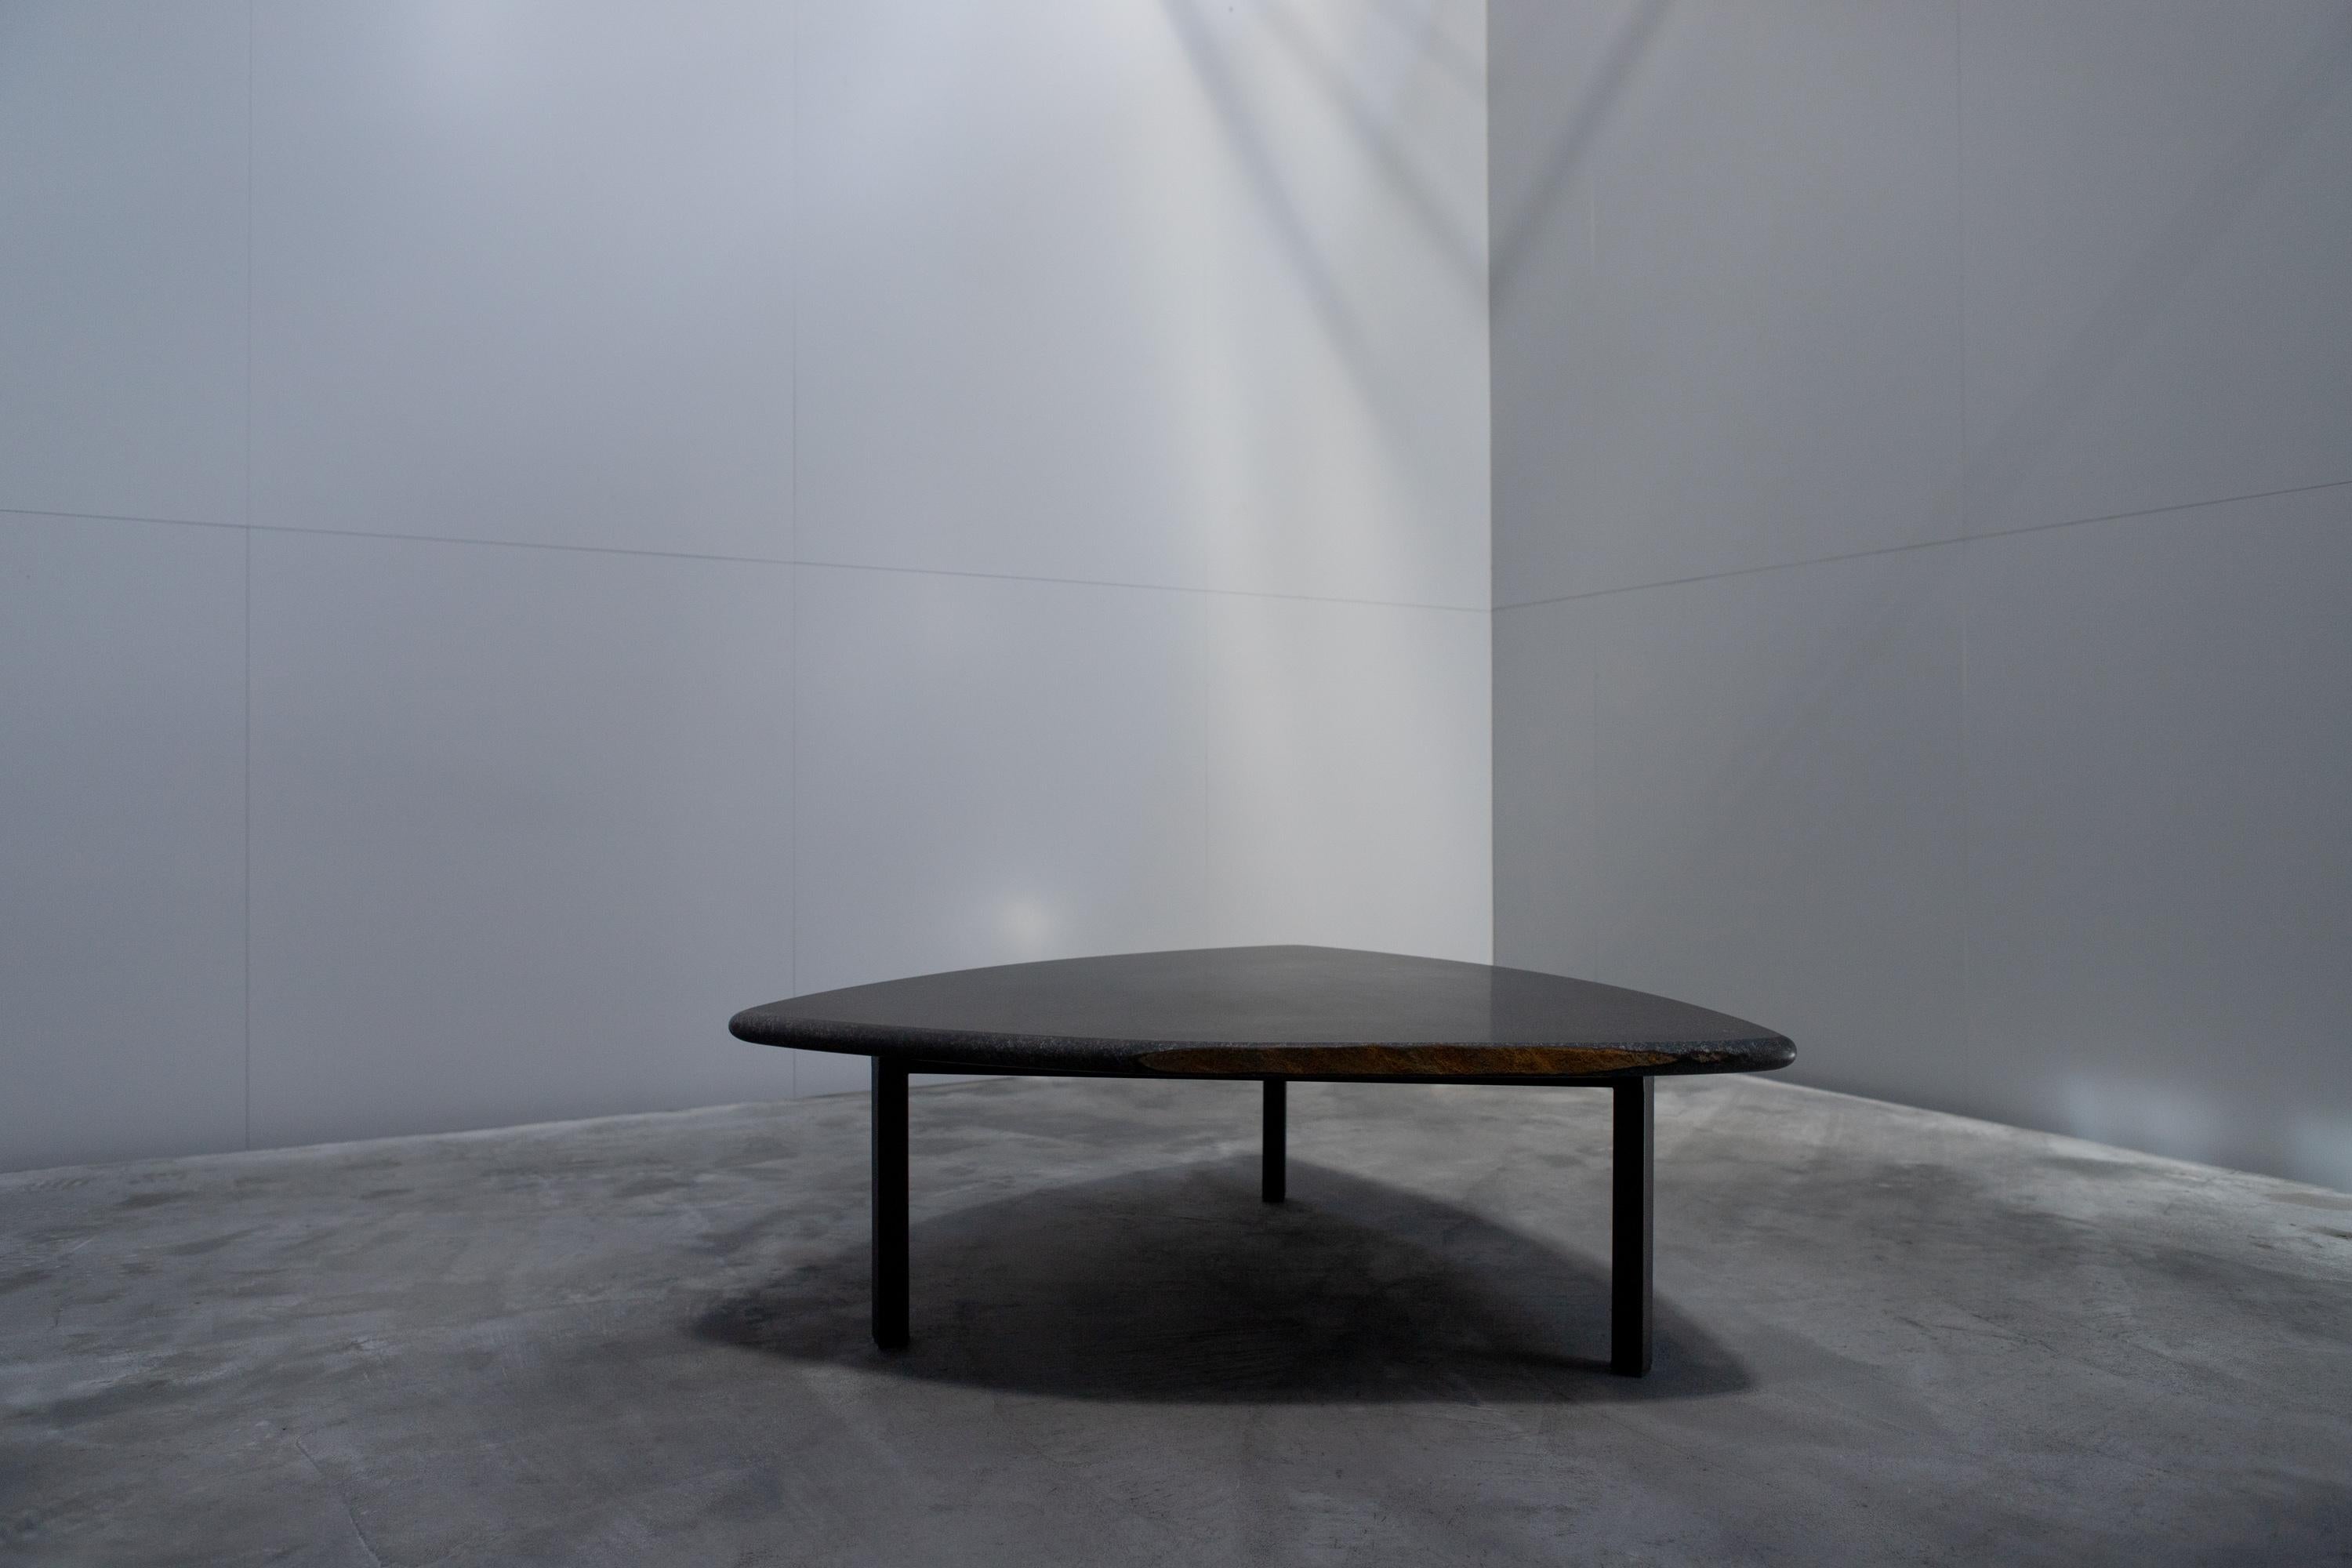 Japanese Sculptural Table, Unique Daté Kan Stone Design by Okurayama